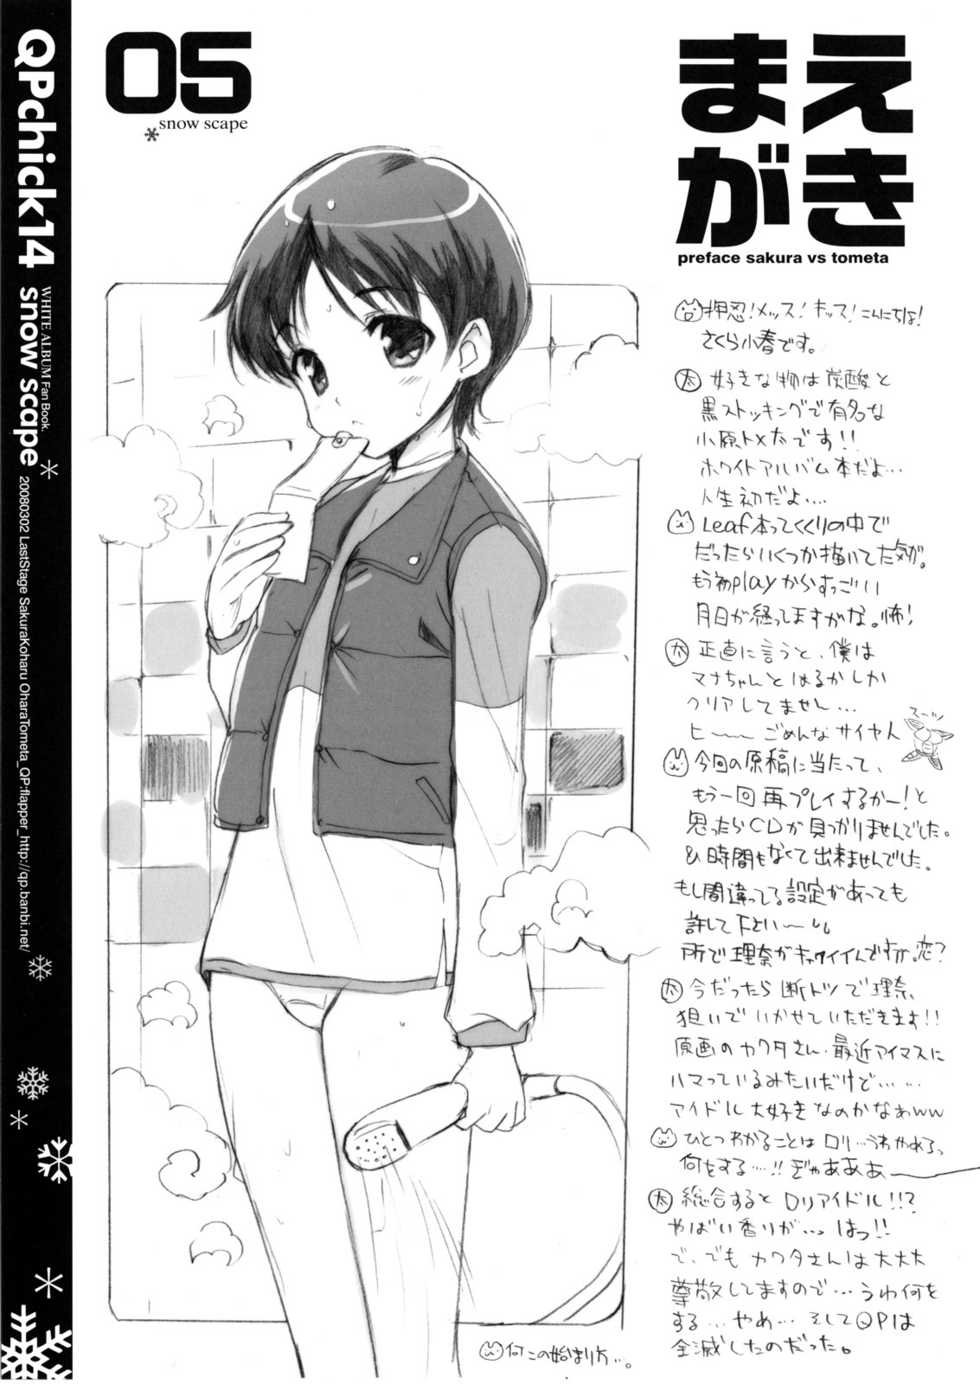 (LastStage) [QP:flapper (Sakura Koharu, Ohara Tometa)] QPchick 14 snow scape (White Album) - Page 6